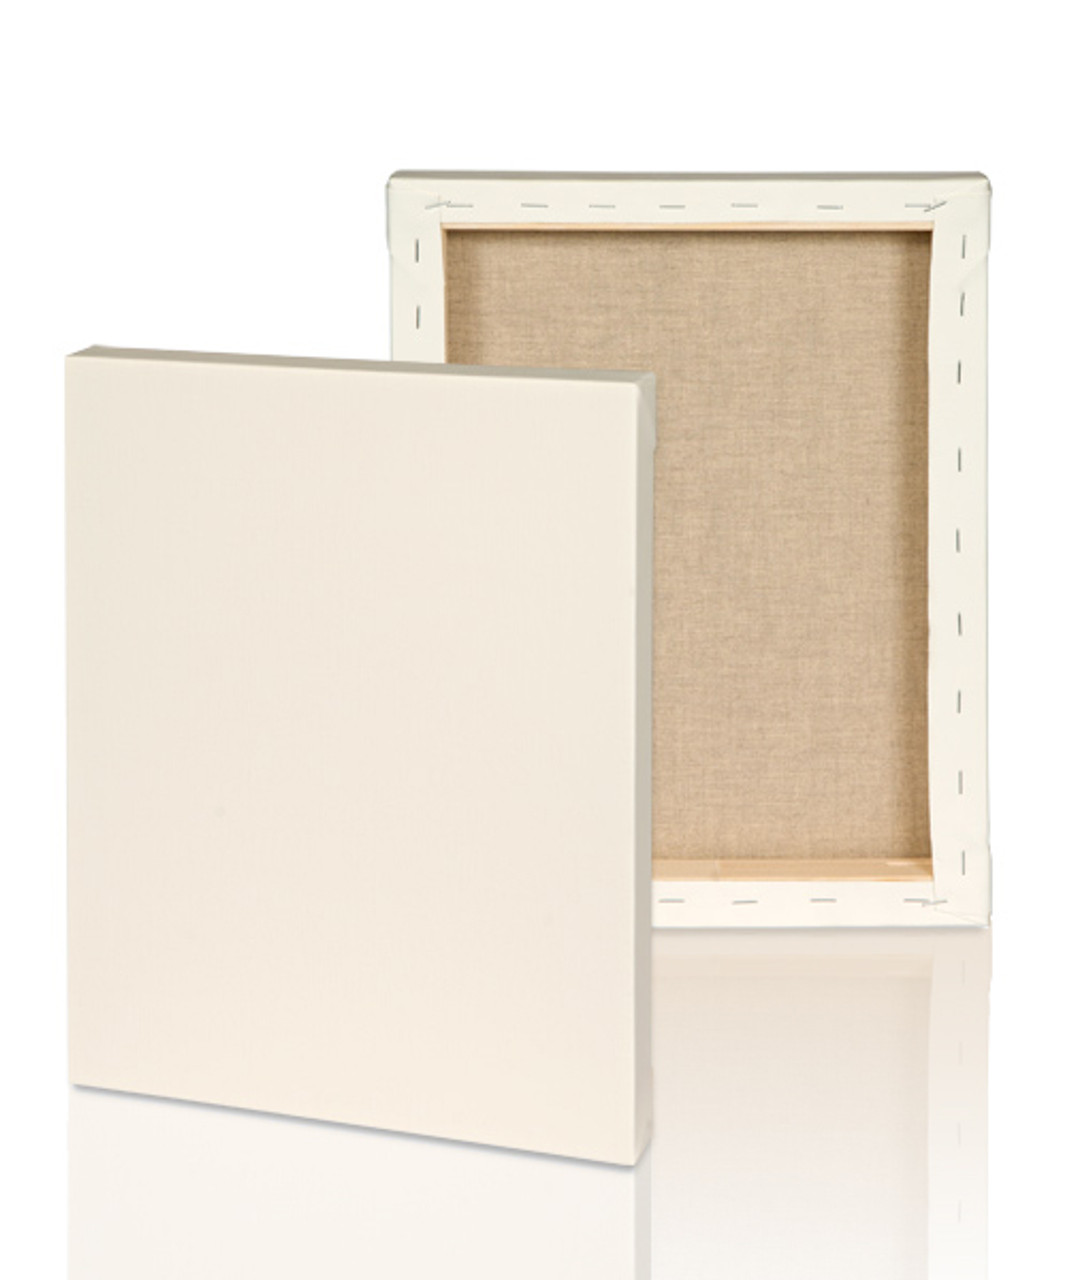 Medium Grain :1-1/2" Stretched Linen canvas 30X60*: Box of 5